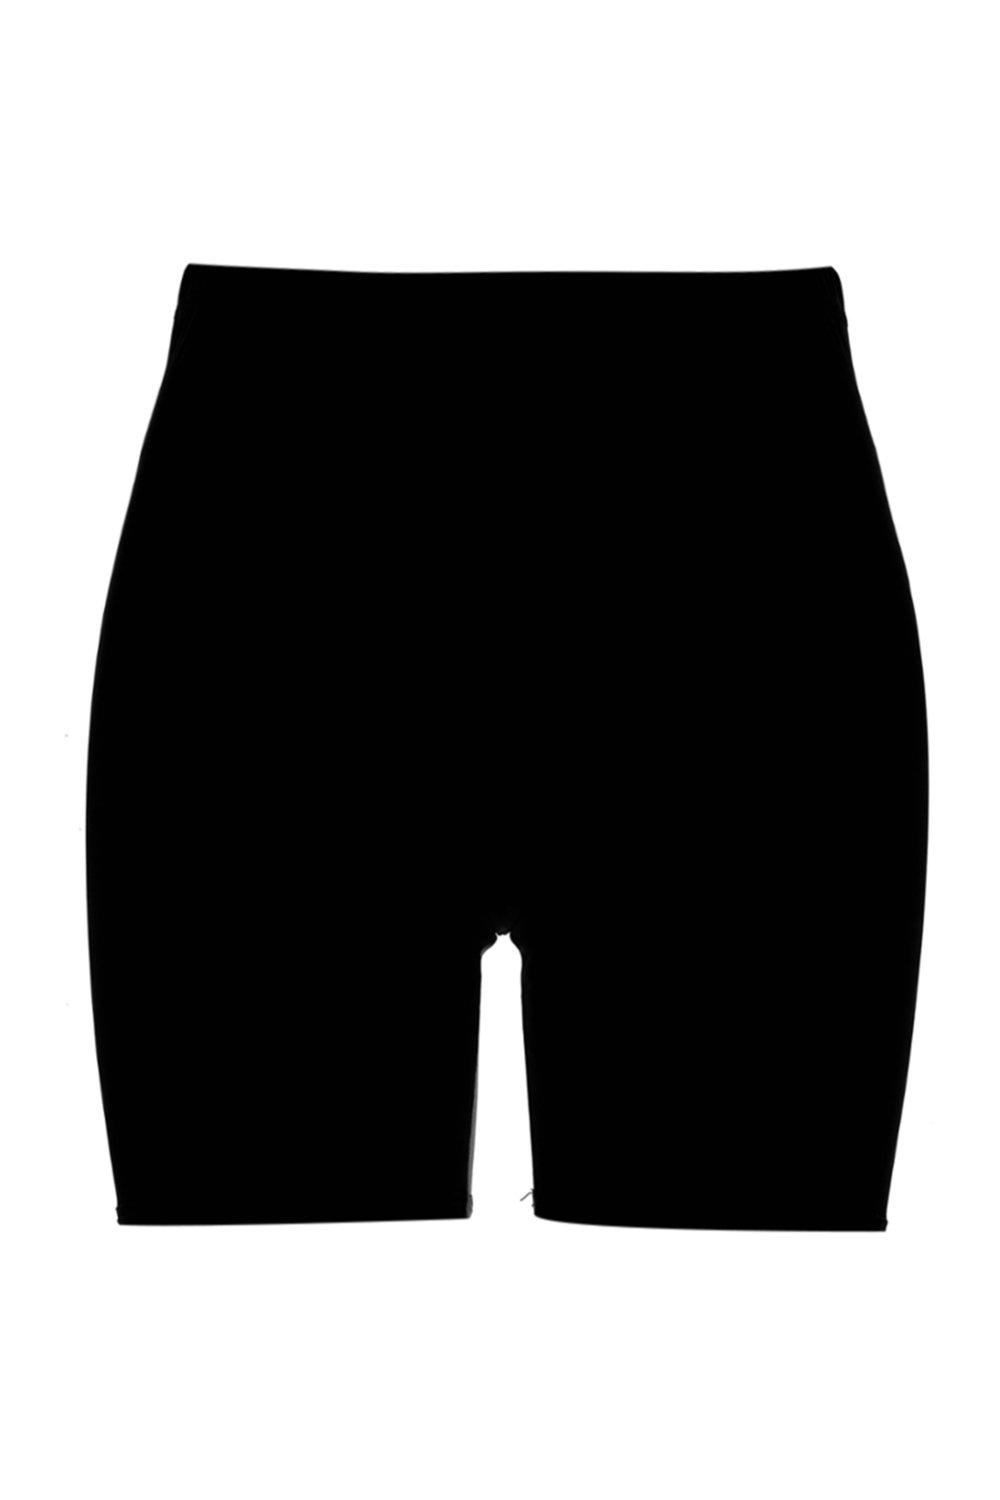 https://media.boohoo.com/i/boohoo/dzz20404_black_xl_2/female-black-basic-slinky-biker-shorts